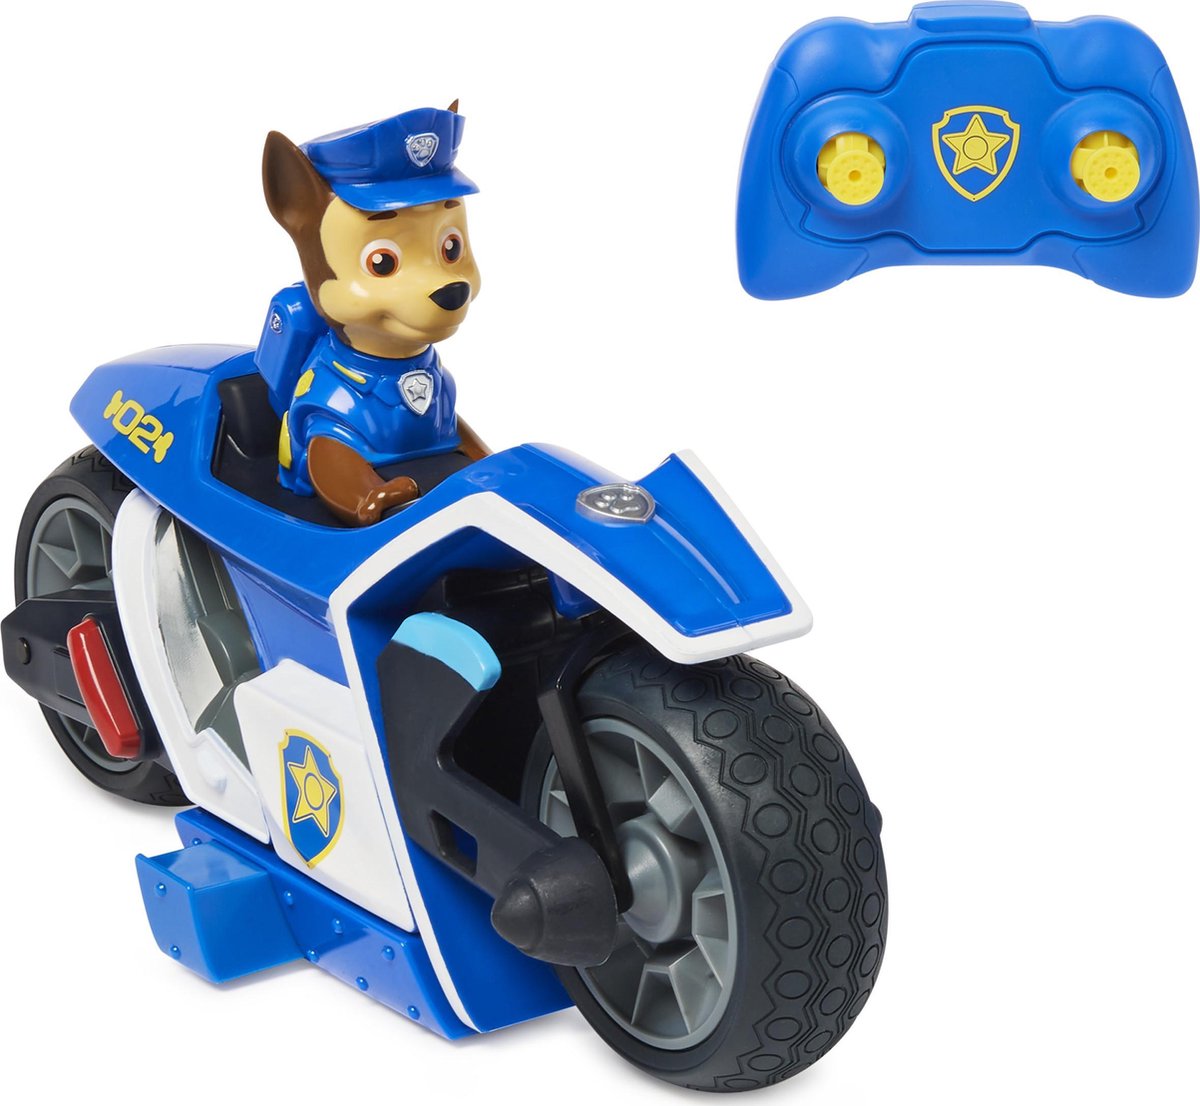 Spinmaster Nickelodeon speelgoedmotor Paw Patrol Chase junior - Azul